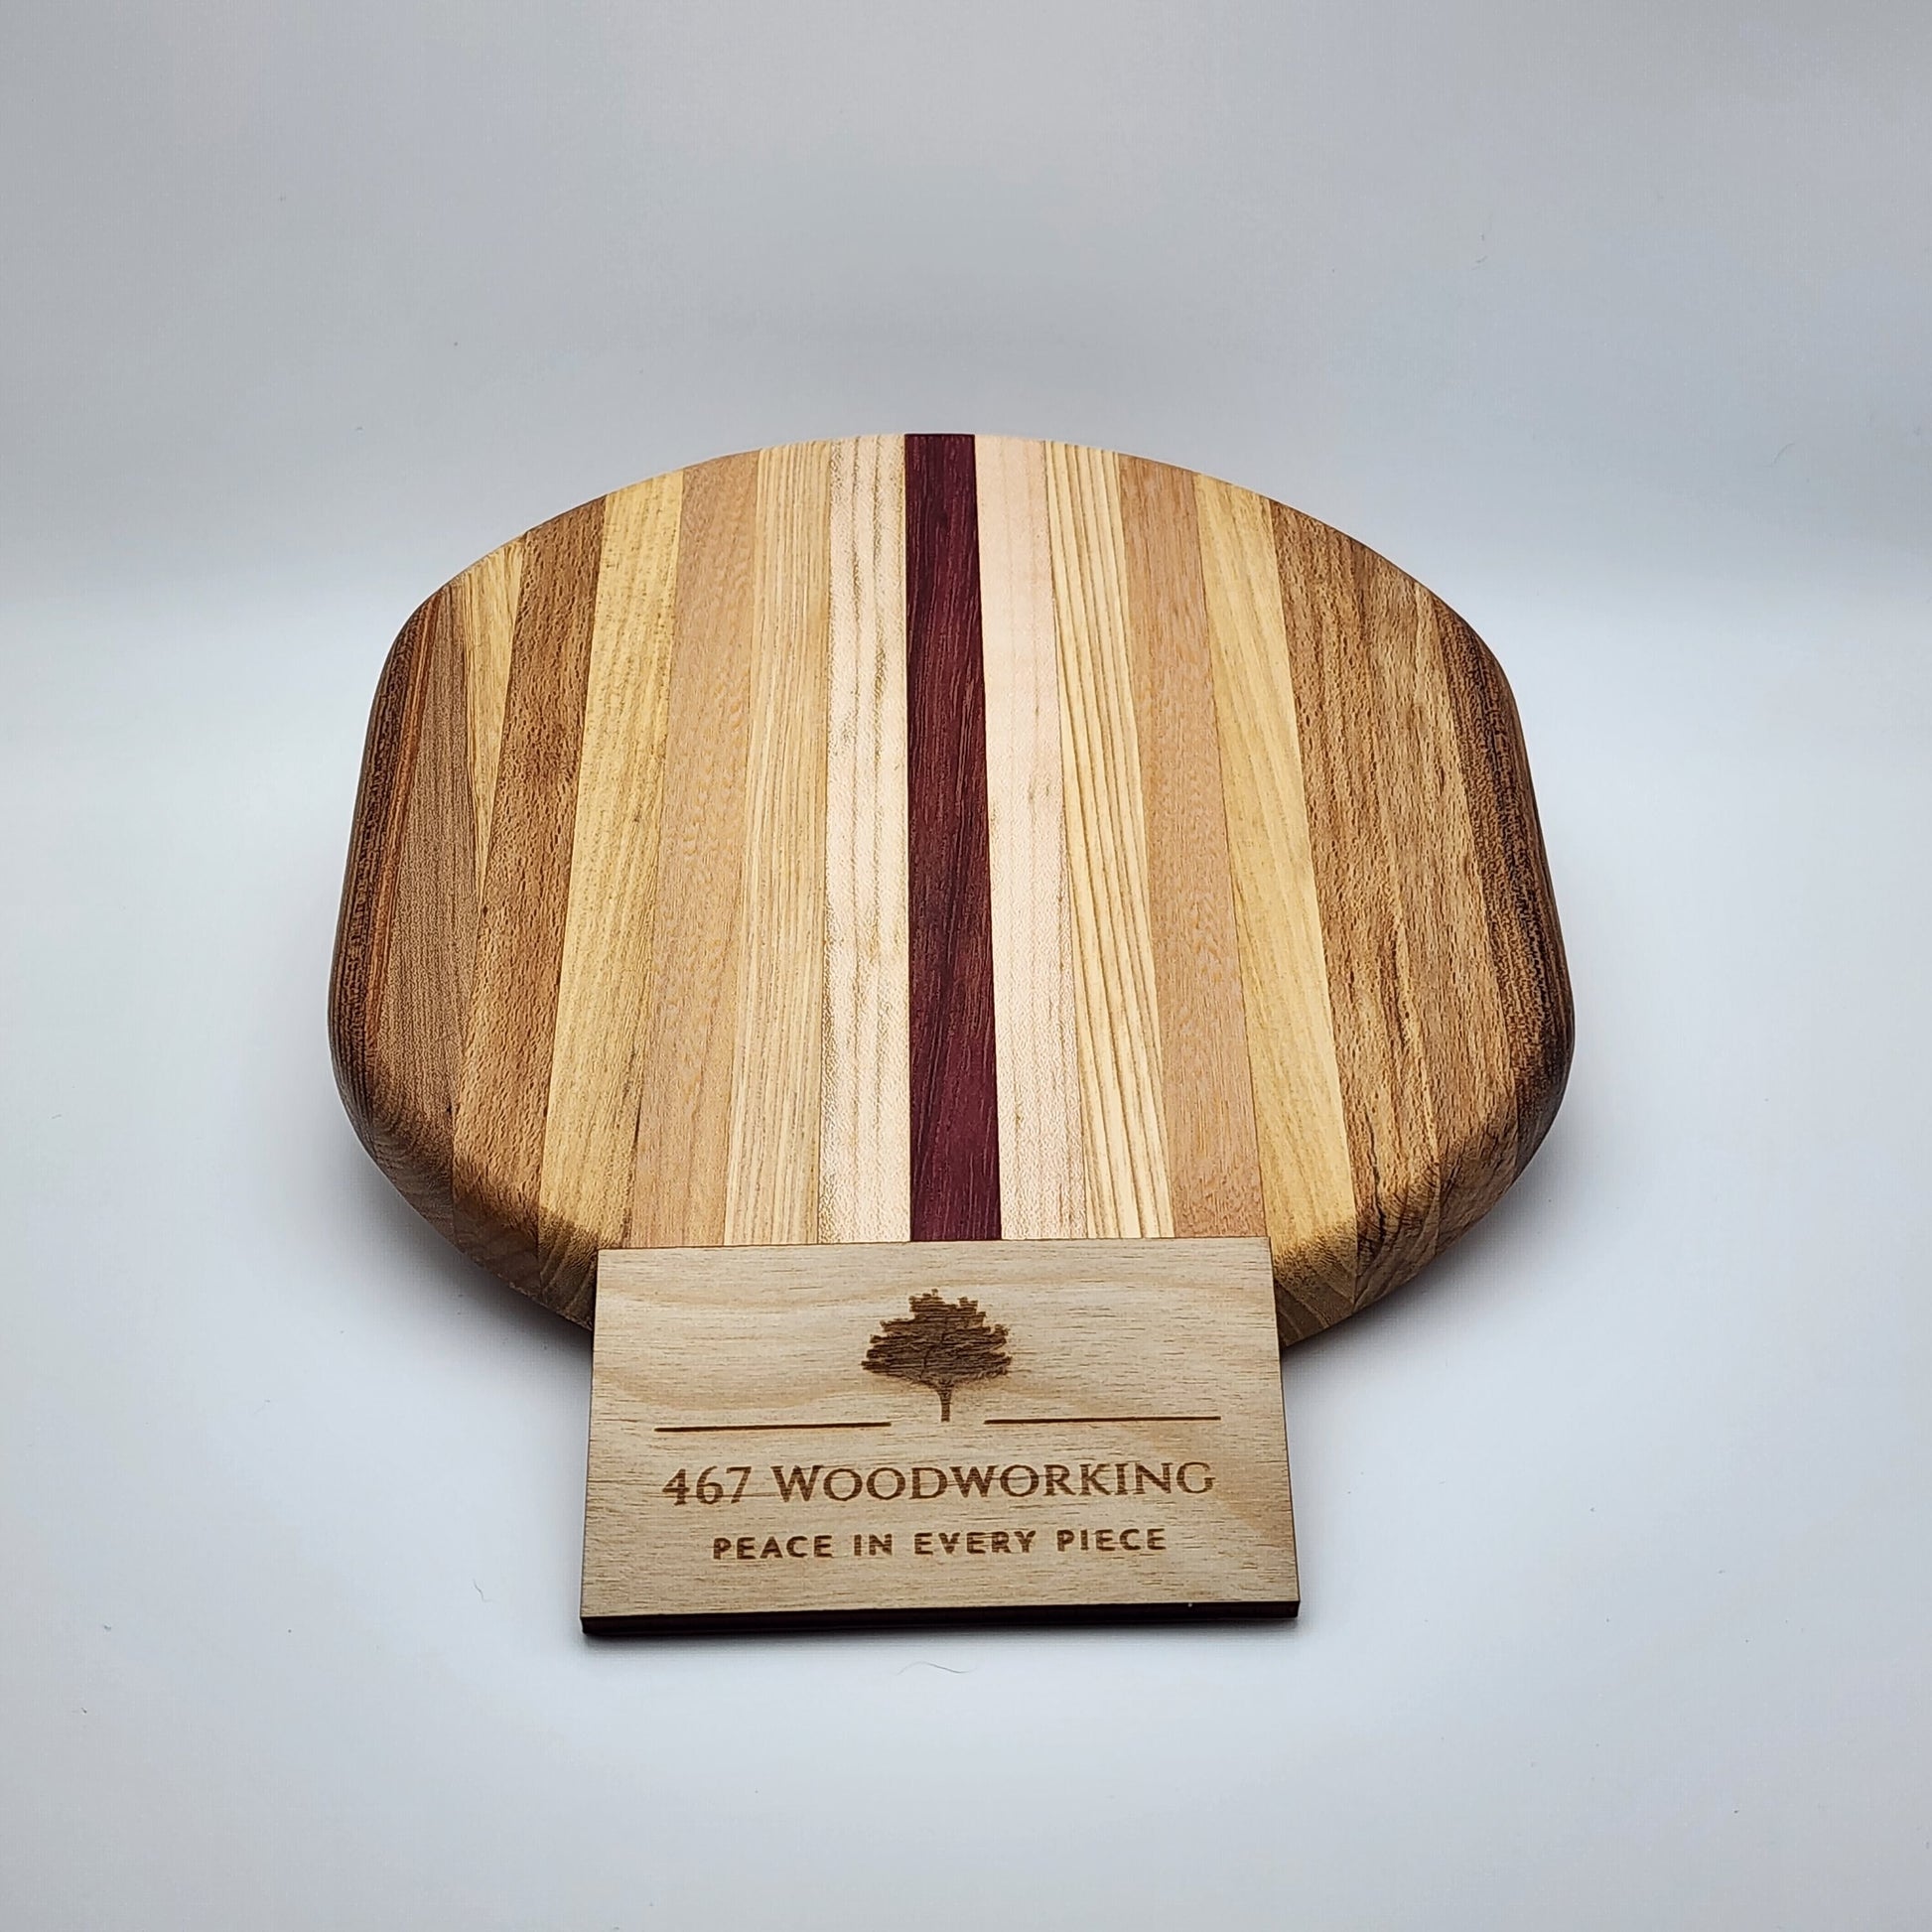 8" Round "Jupiter" Cutting Board - Hardwood - Domestic Hardwood - Exotic Hardwood - Cookware - Board - Handmade - Wood - Wooden - Multicolor